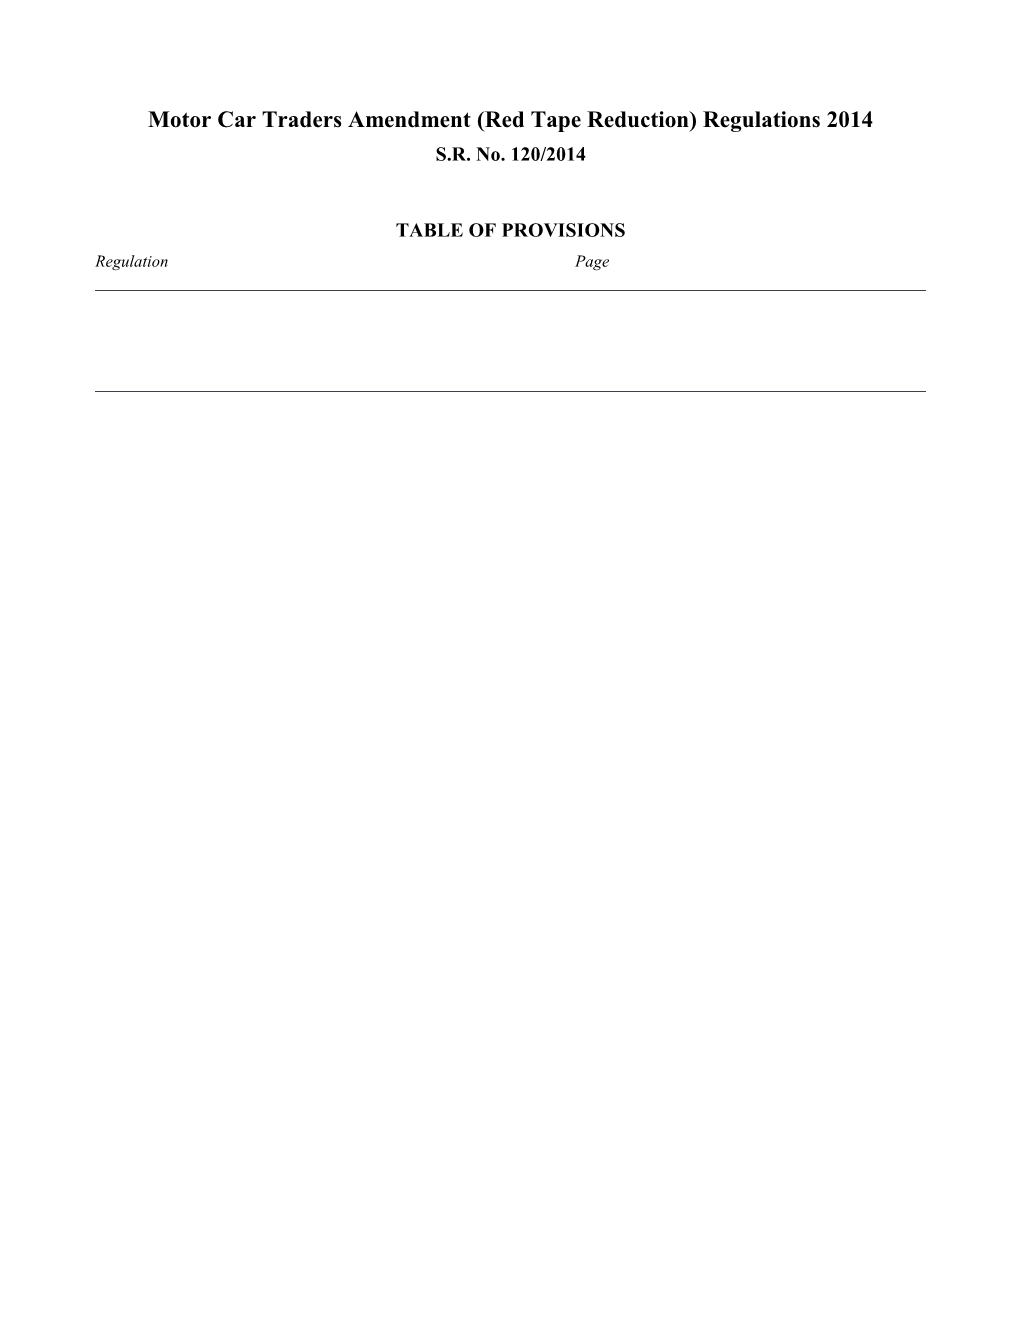 Motor Car Traders Amendment (Red Tape Reduction) Regulations 2014